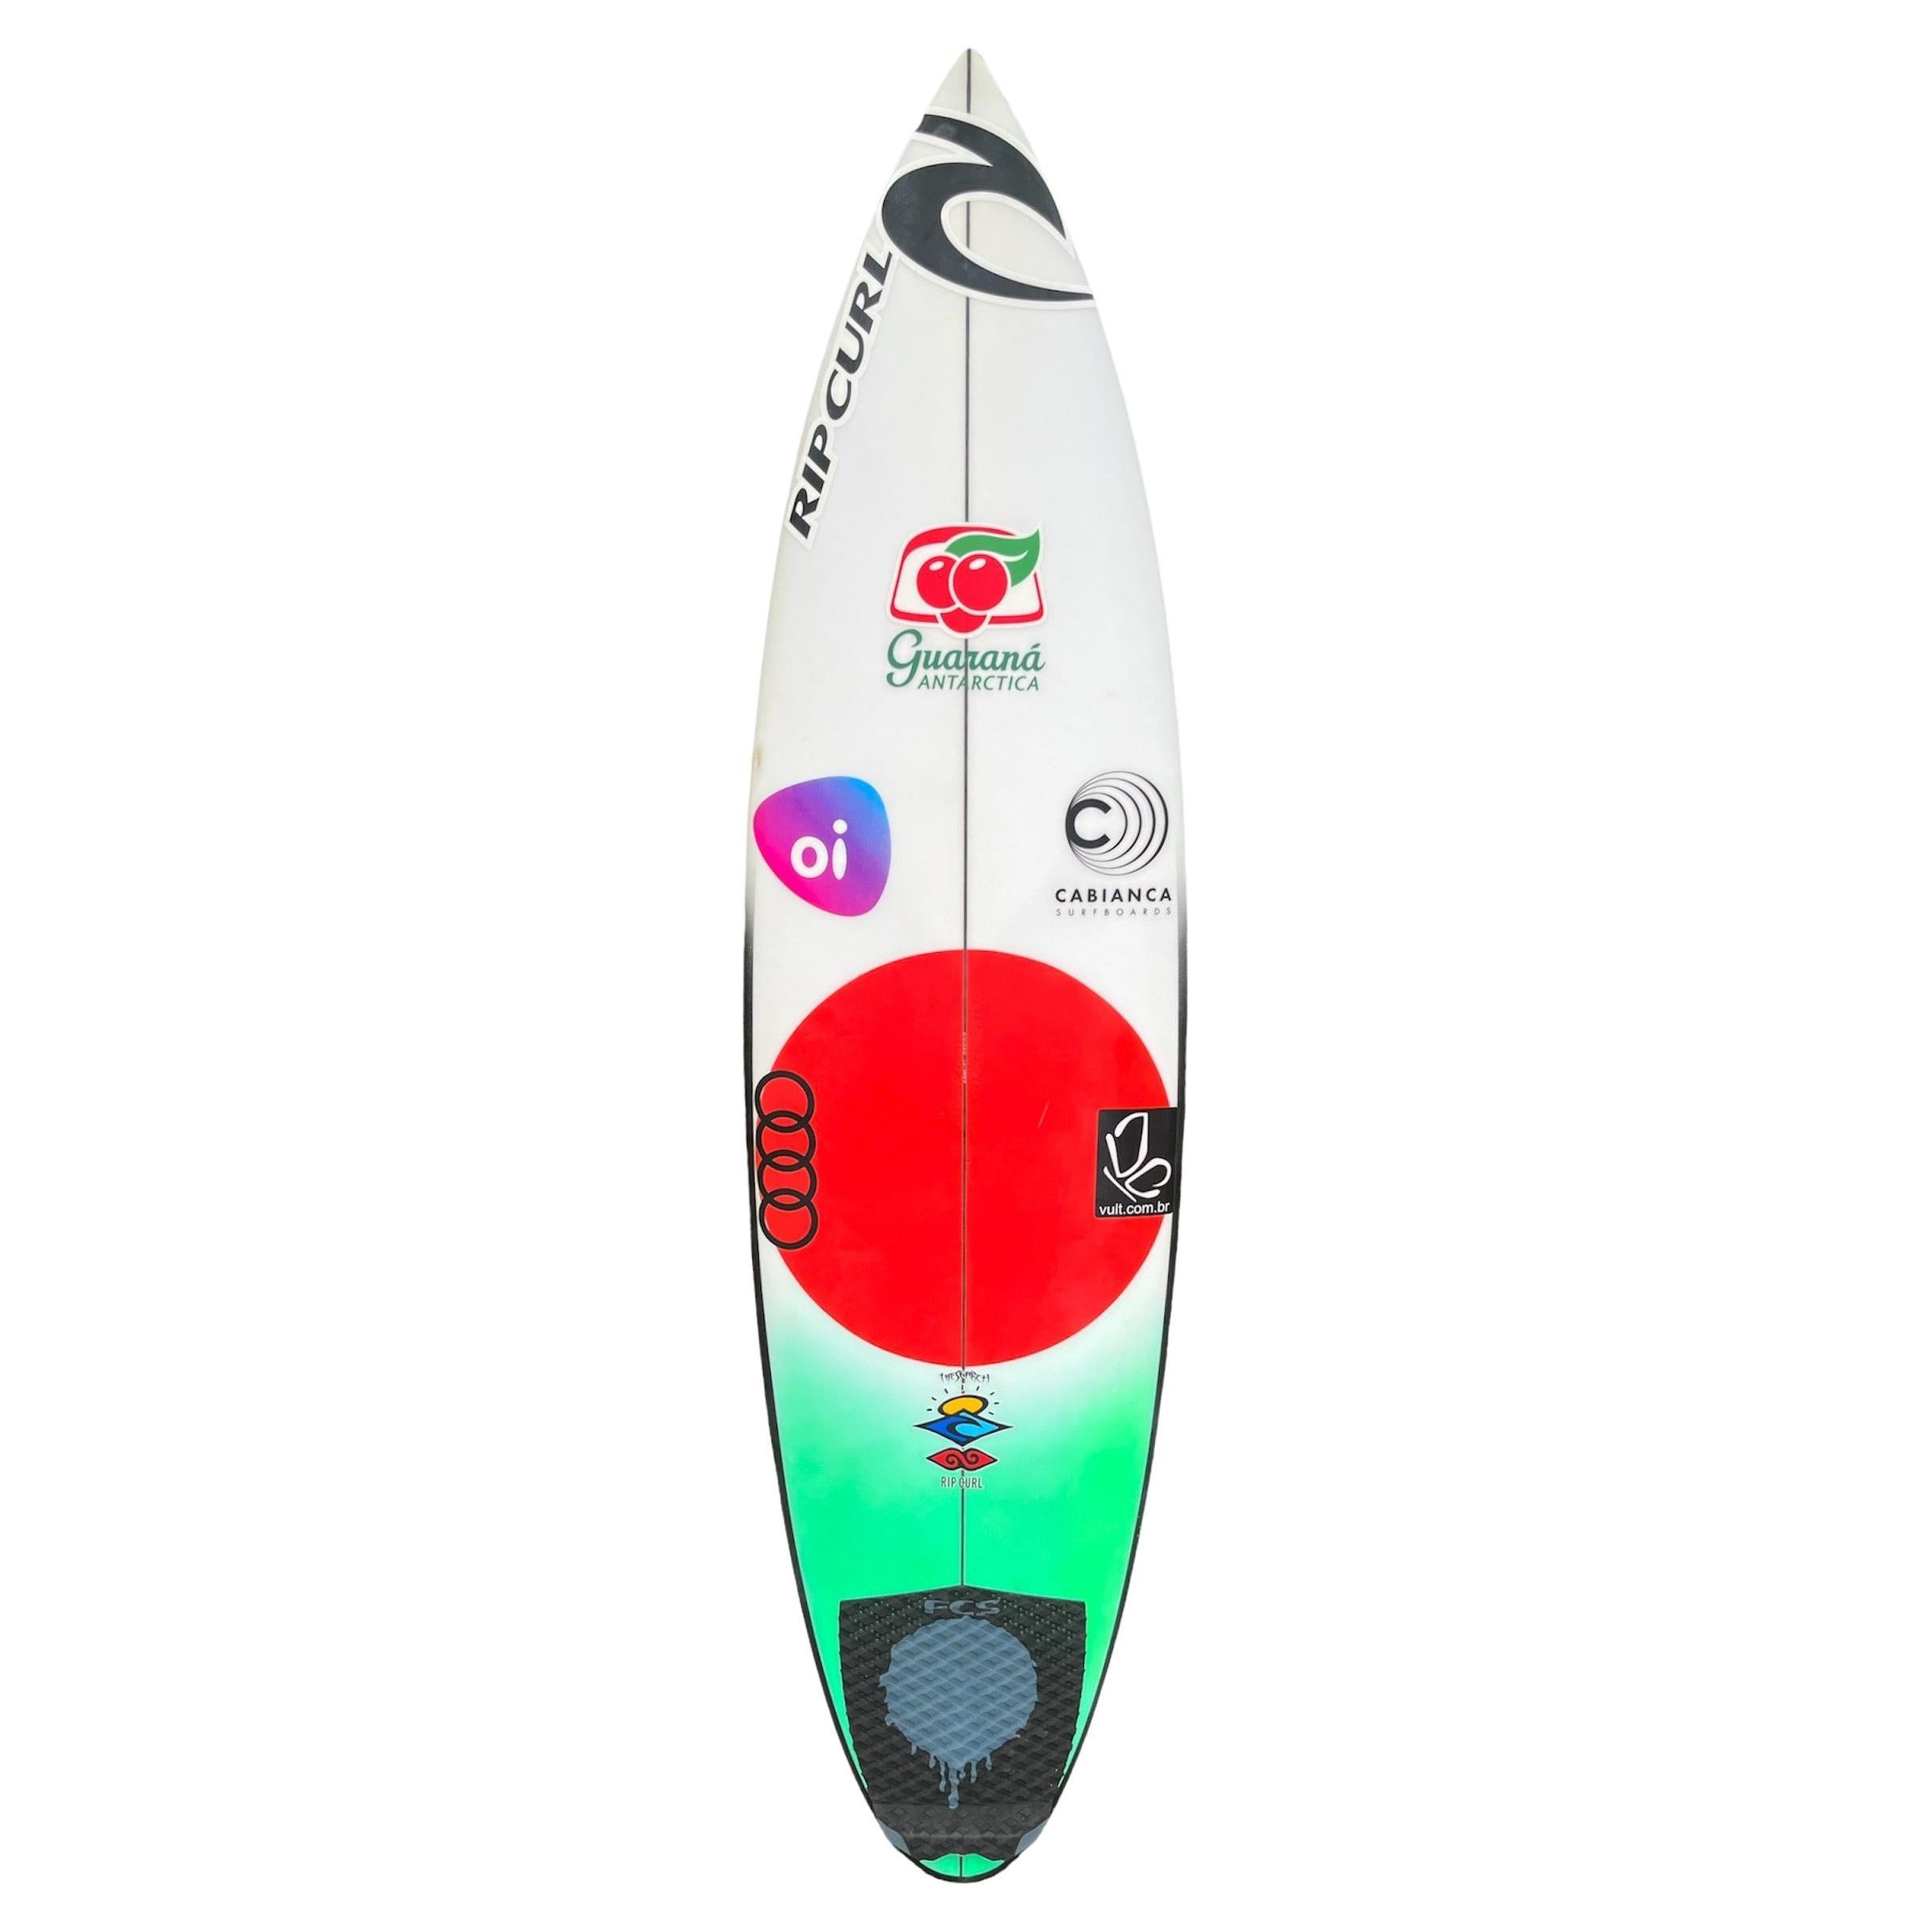 3X World Champion Gabriel Medina personal Japan Summer Olympics surfboard (2021) For Sale